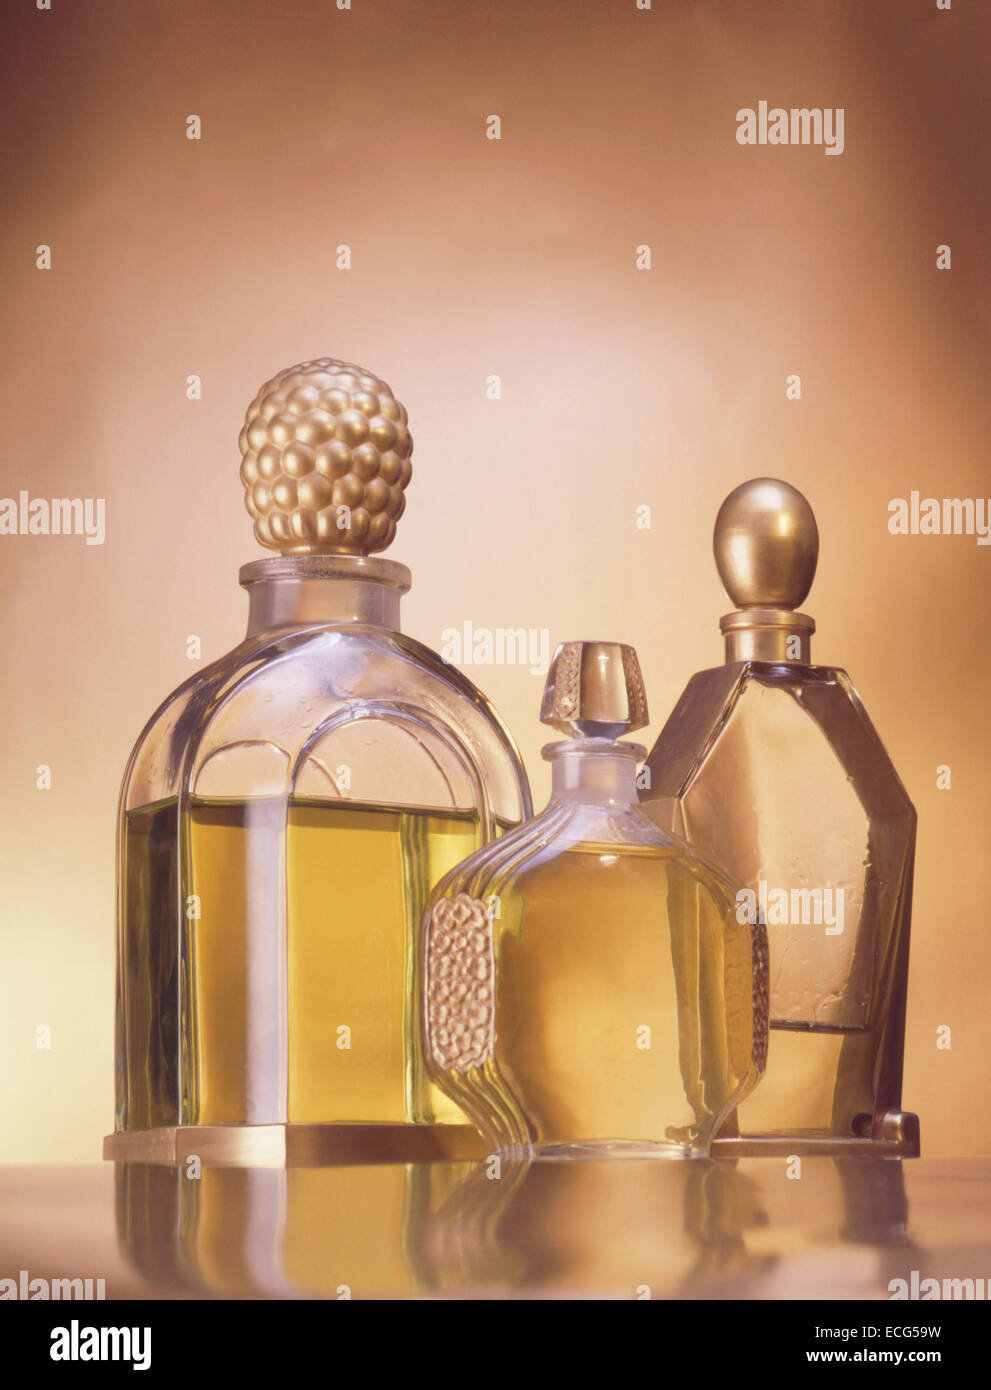 Coco chanel perfume bottle Stock Photo - Alamy